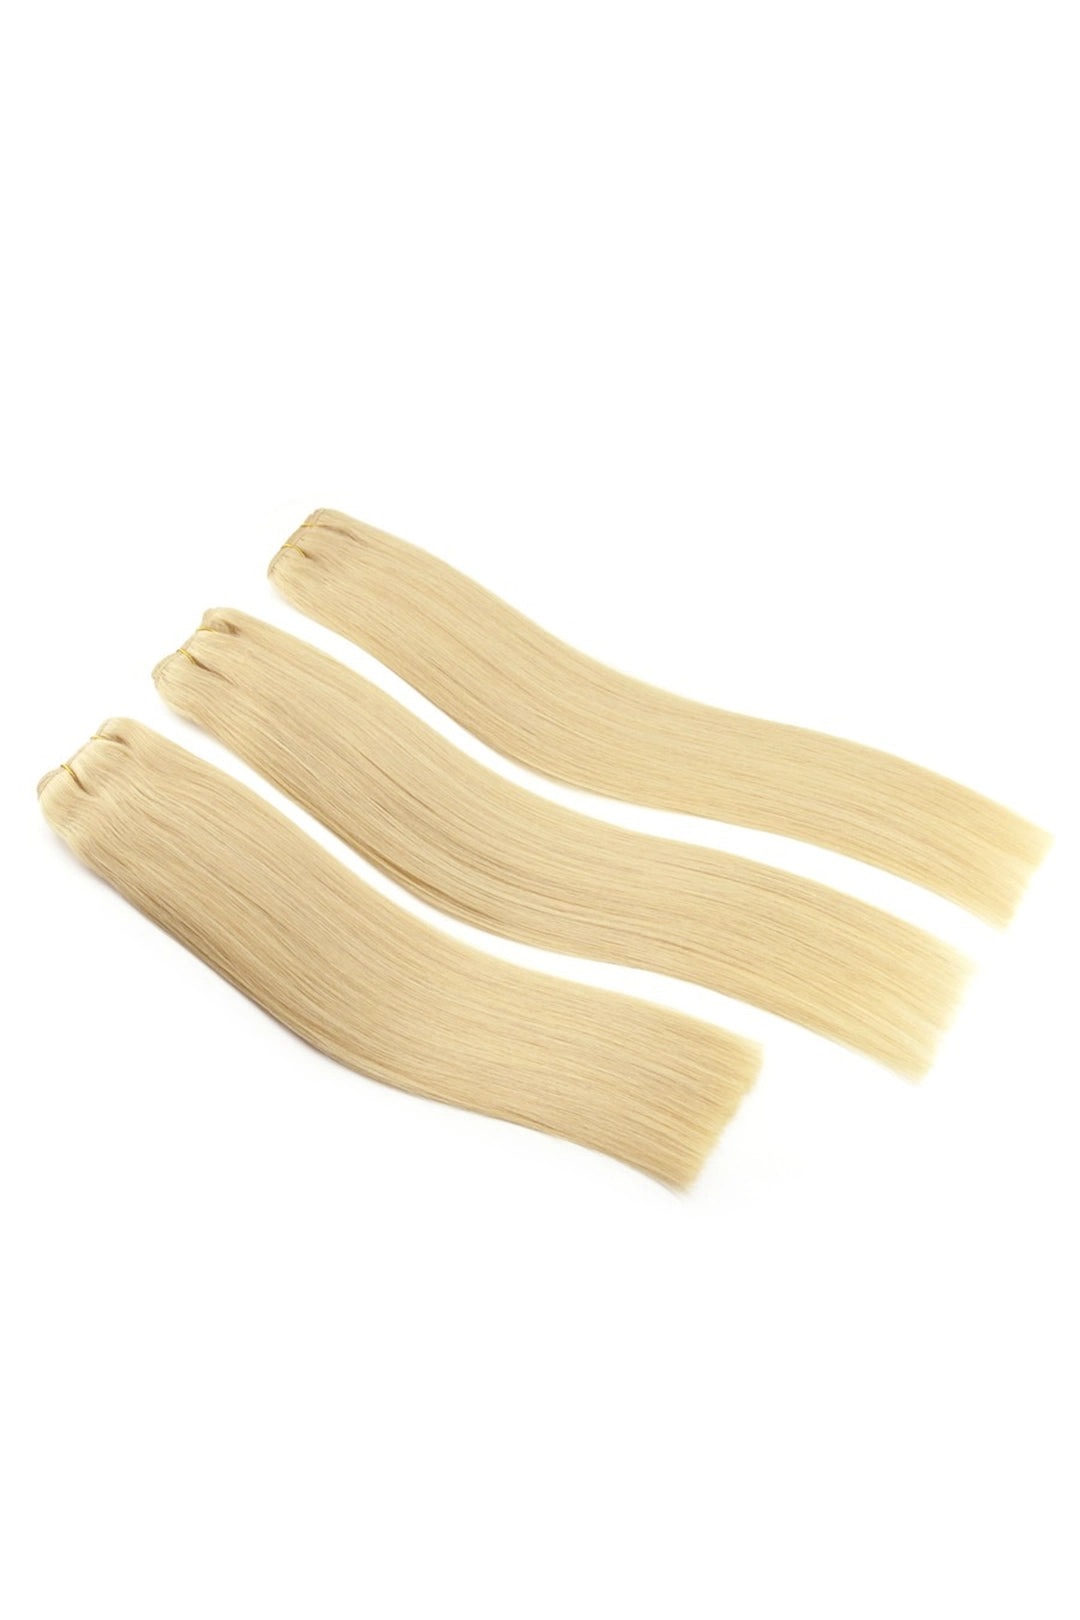 Platinum Blonde Bundles #60A Sew-in Extensions Straight Virgin Hair